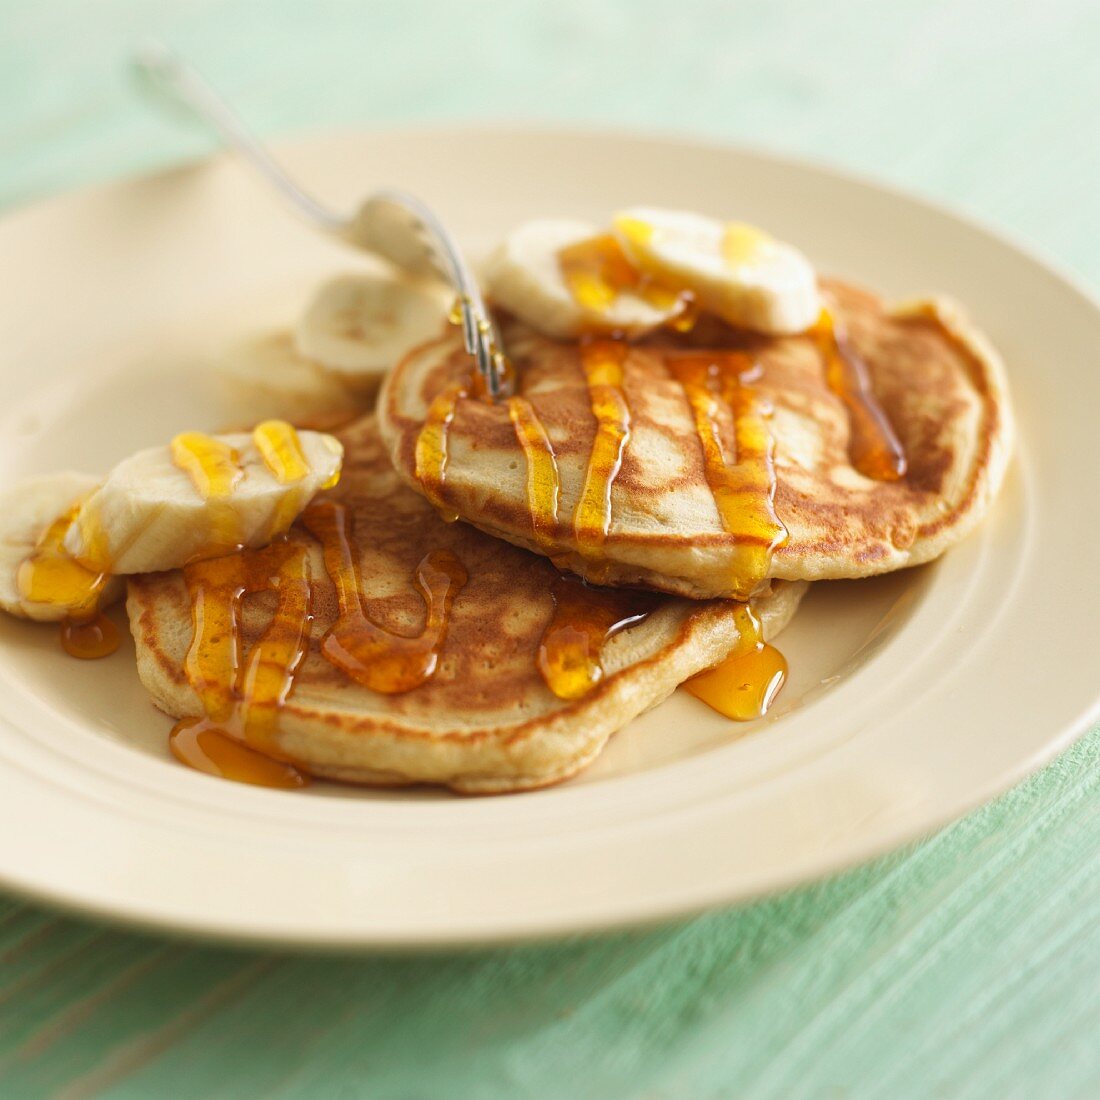 Pancakes with bananas and maple syrup (USA)